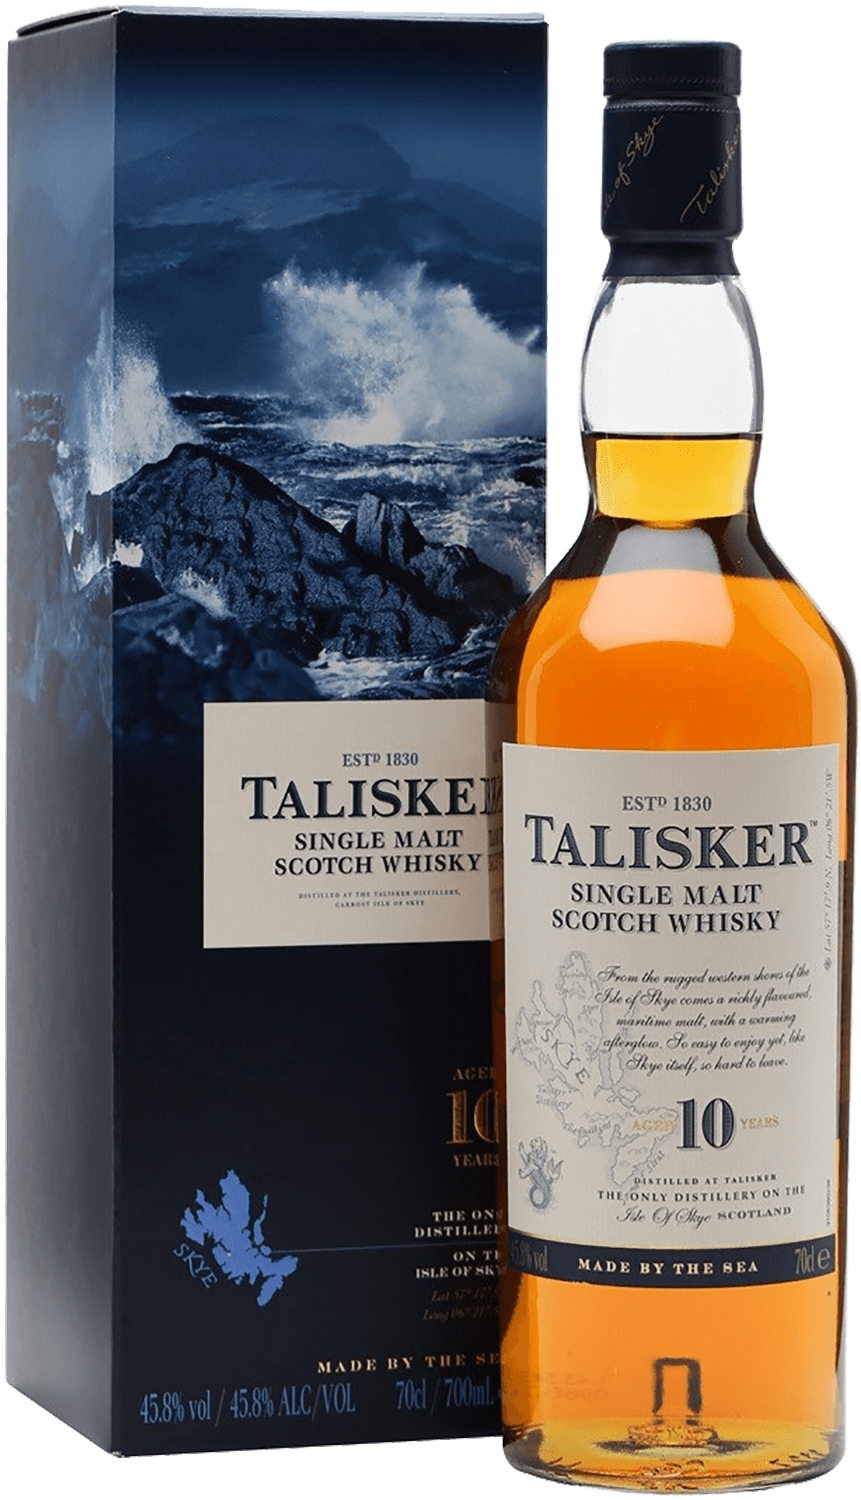 Talisker 10 years single malt scotch whisky (gift box) bruichladdich black art edition 05 1 24 aged years single malt scotch whisky gift box